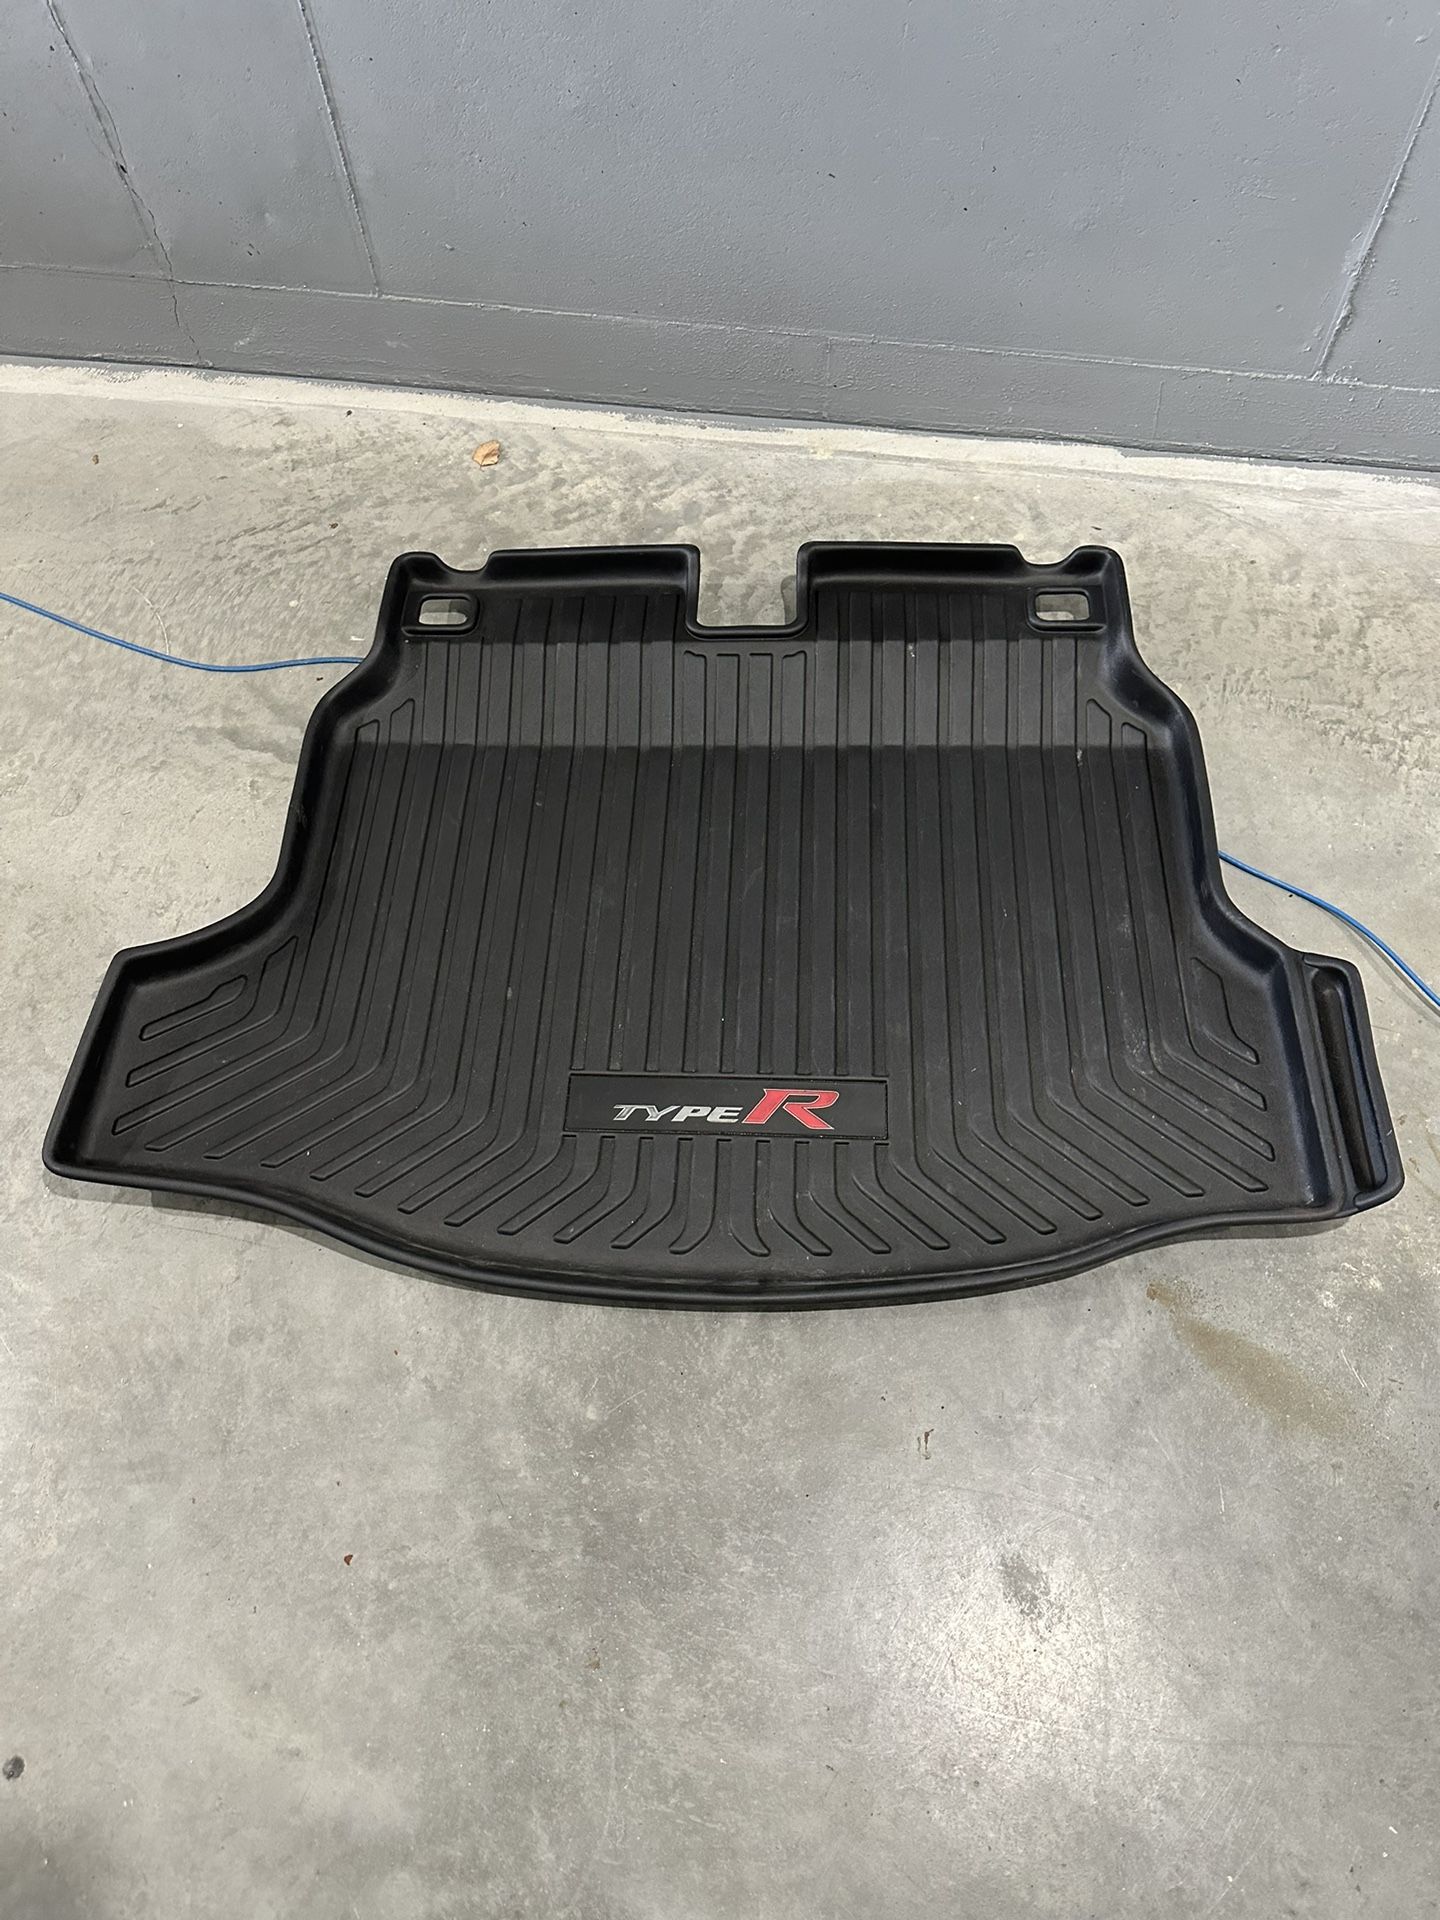 Honda Civic 10th gen 10th gen Civic Hatch Back & Type R Trunk & Floor mats $100 trunk liner